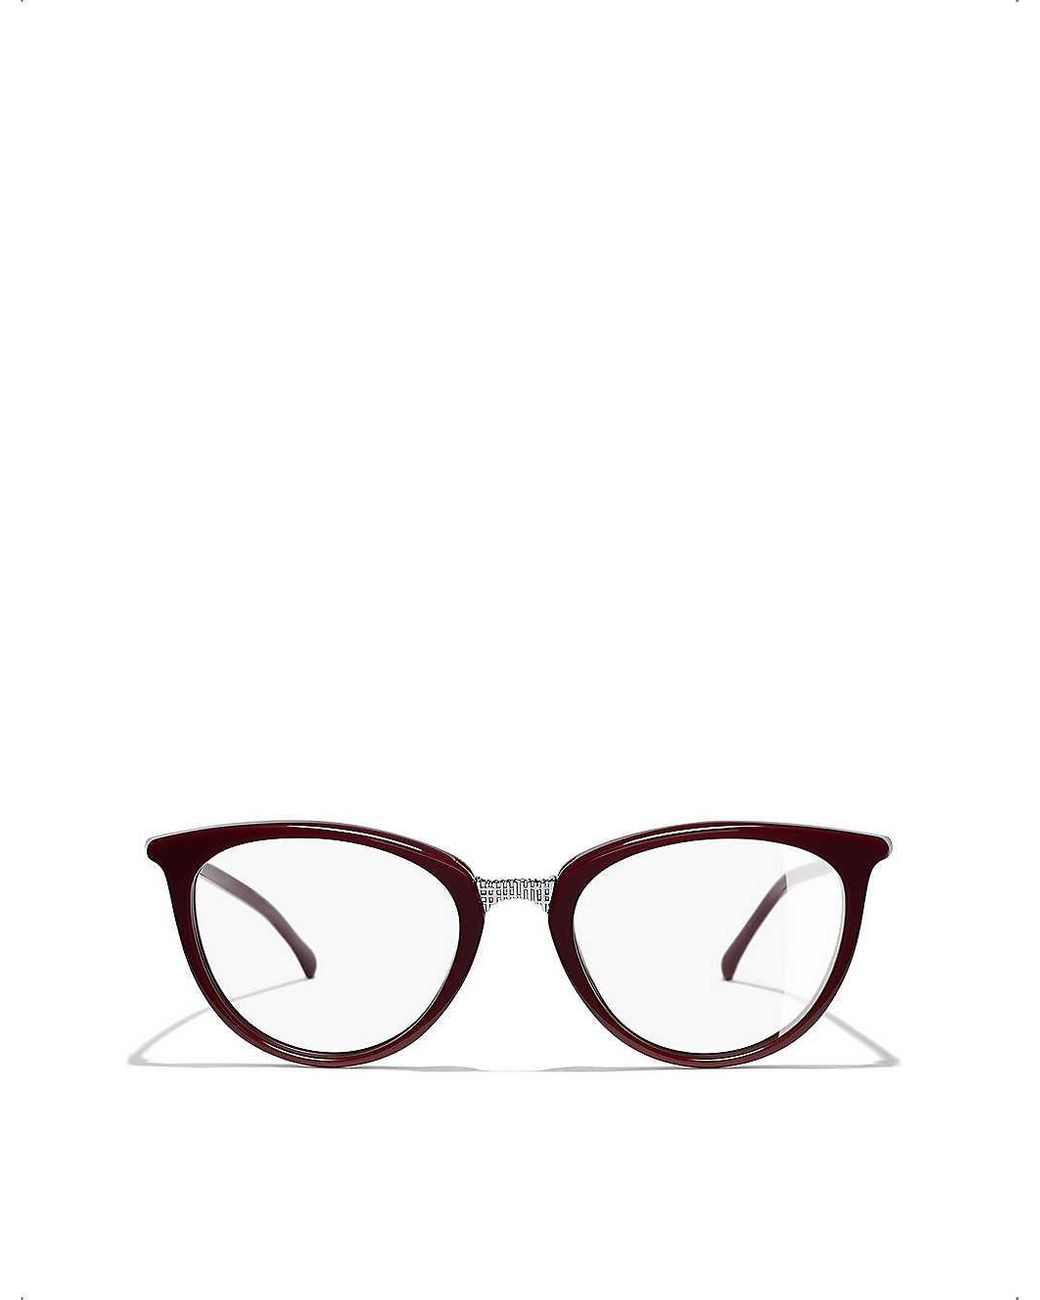 Chanel Rectangle Eyeglasses in Black